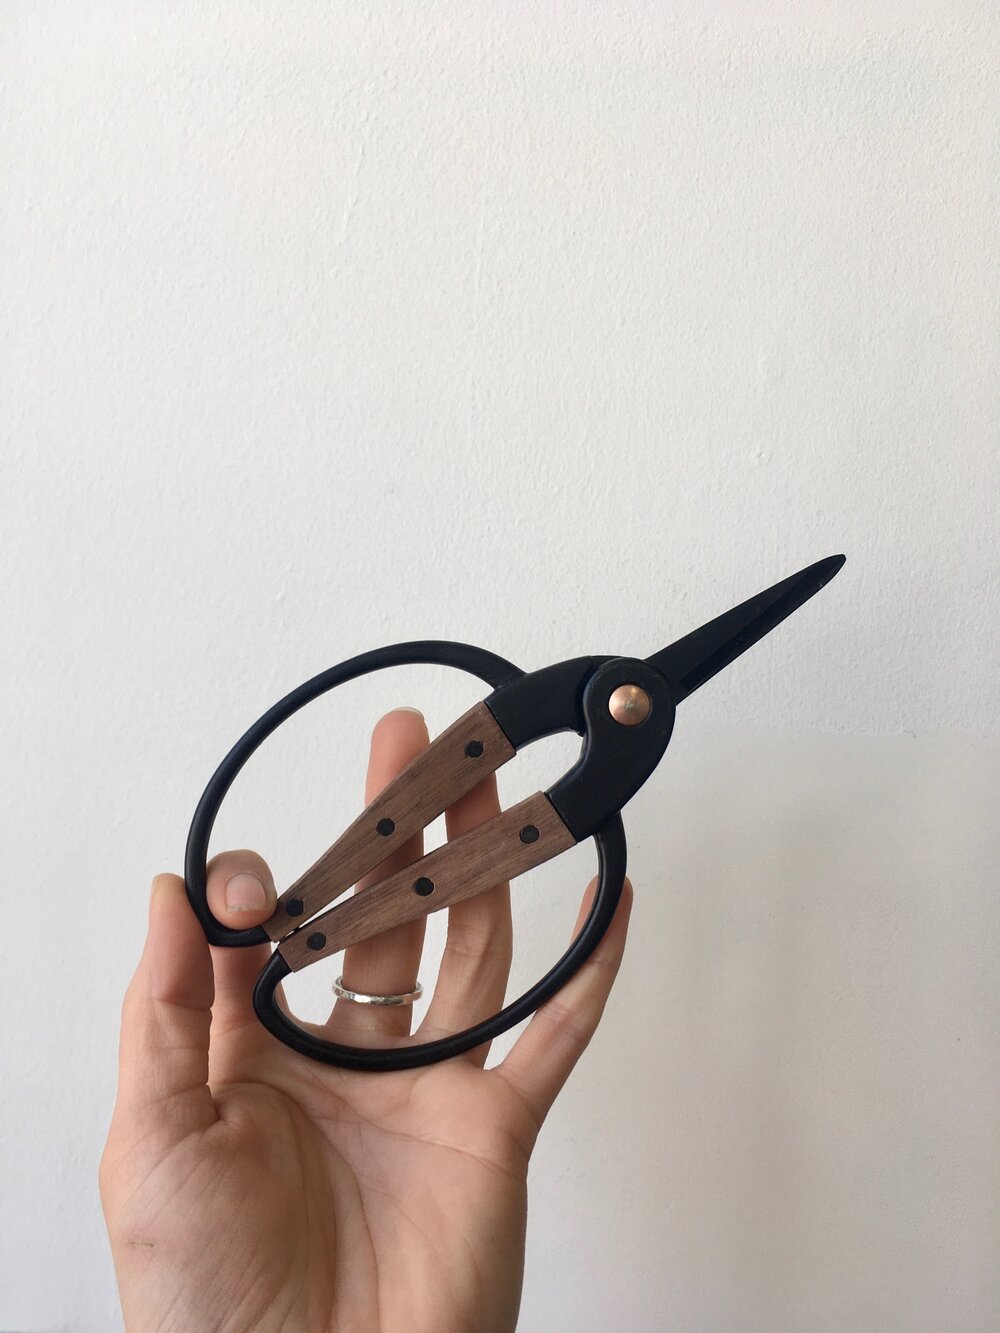 Barebones Large Scissors – MIgardener